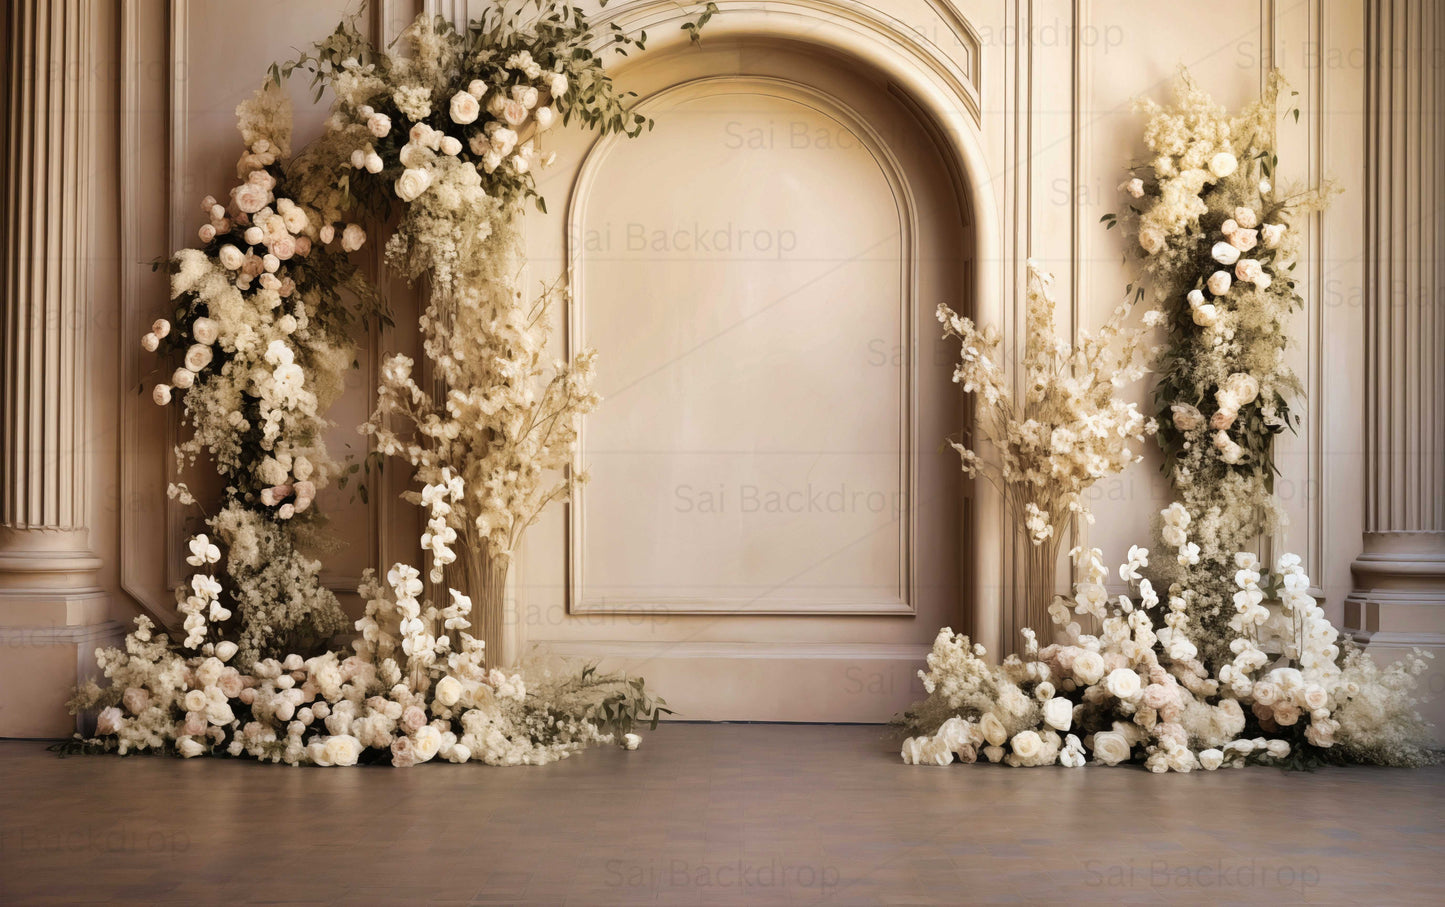 Ivory Floral Grandeur Theme Backdrop